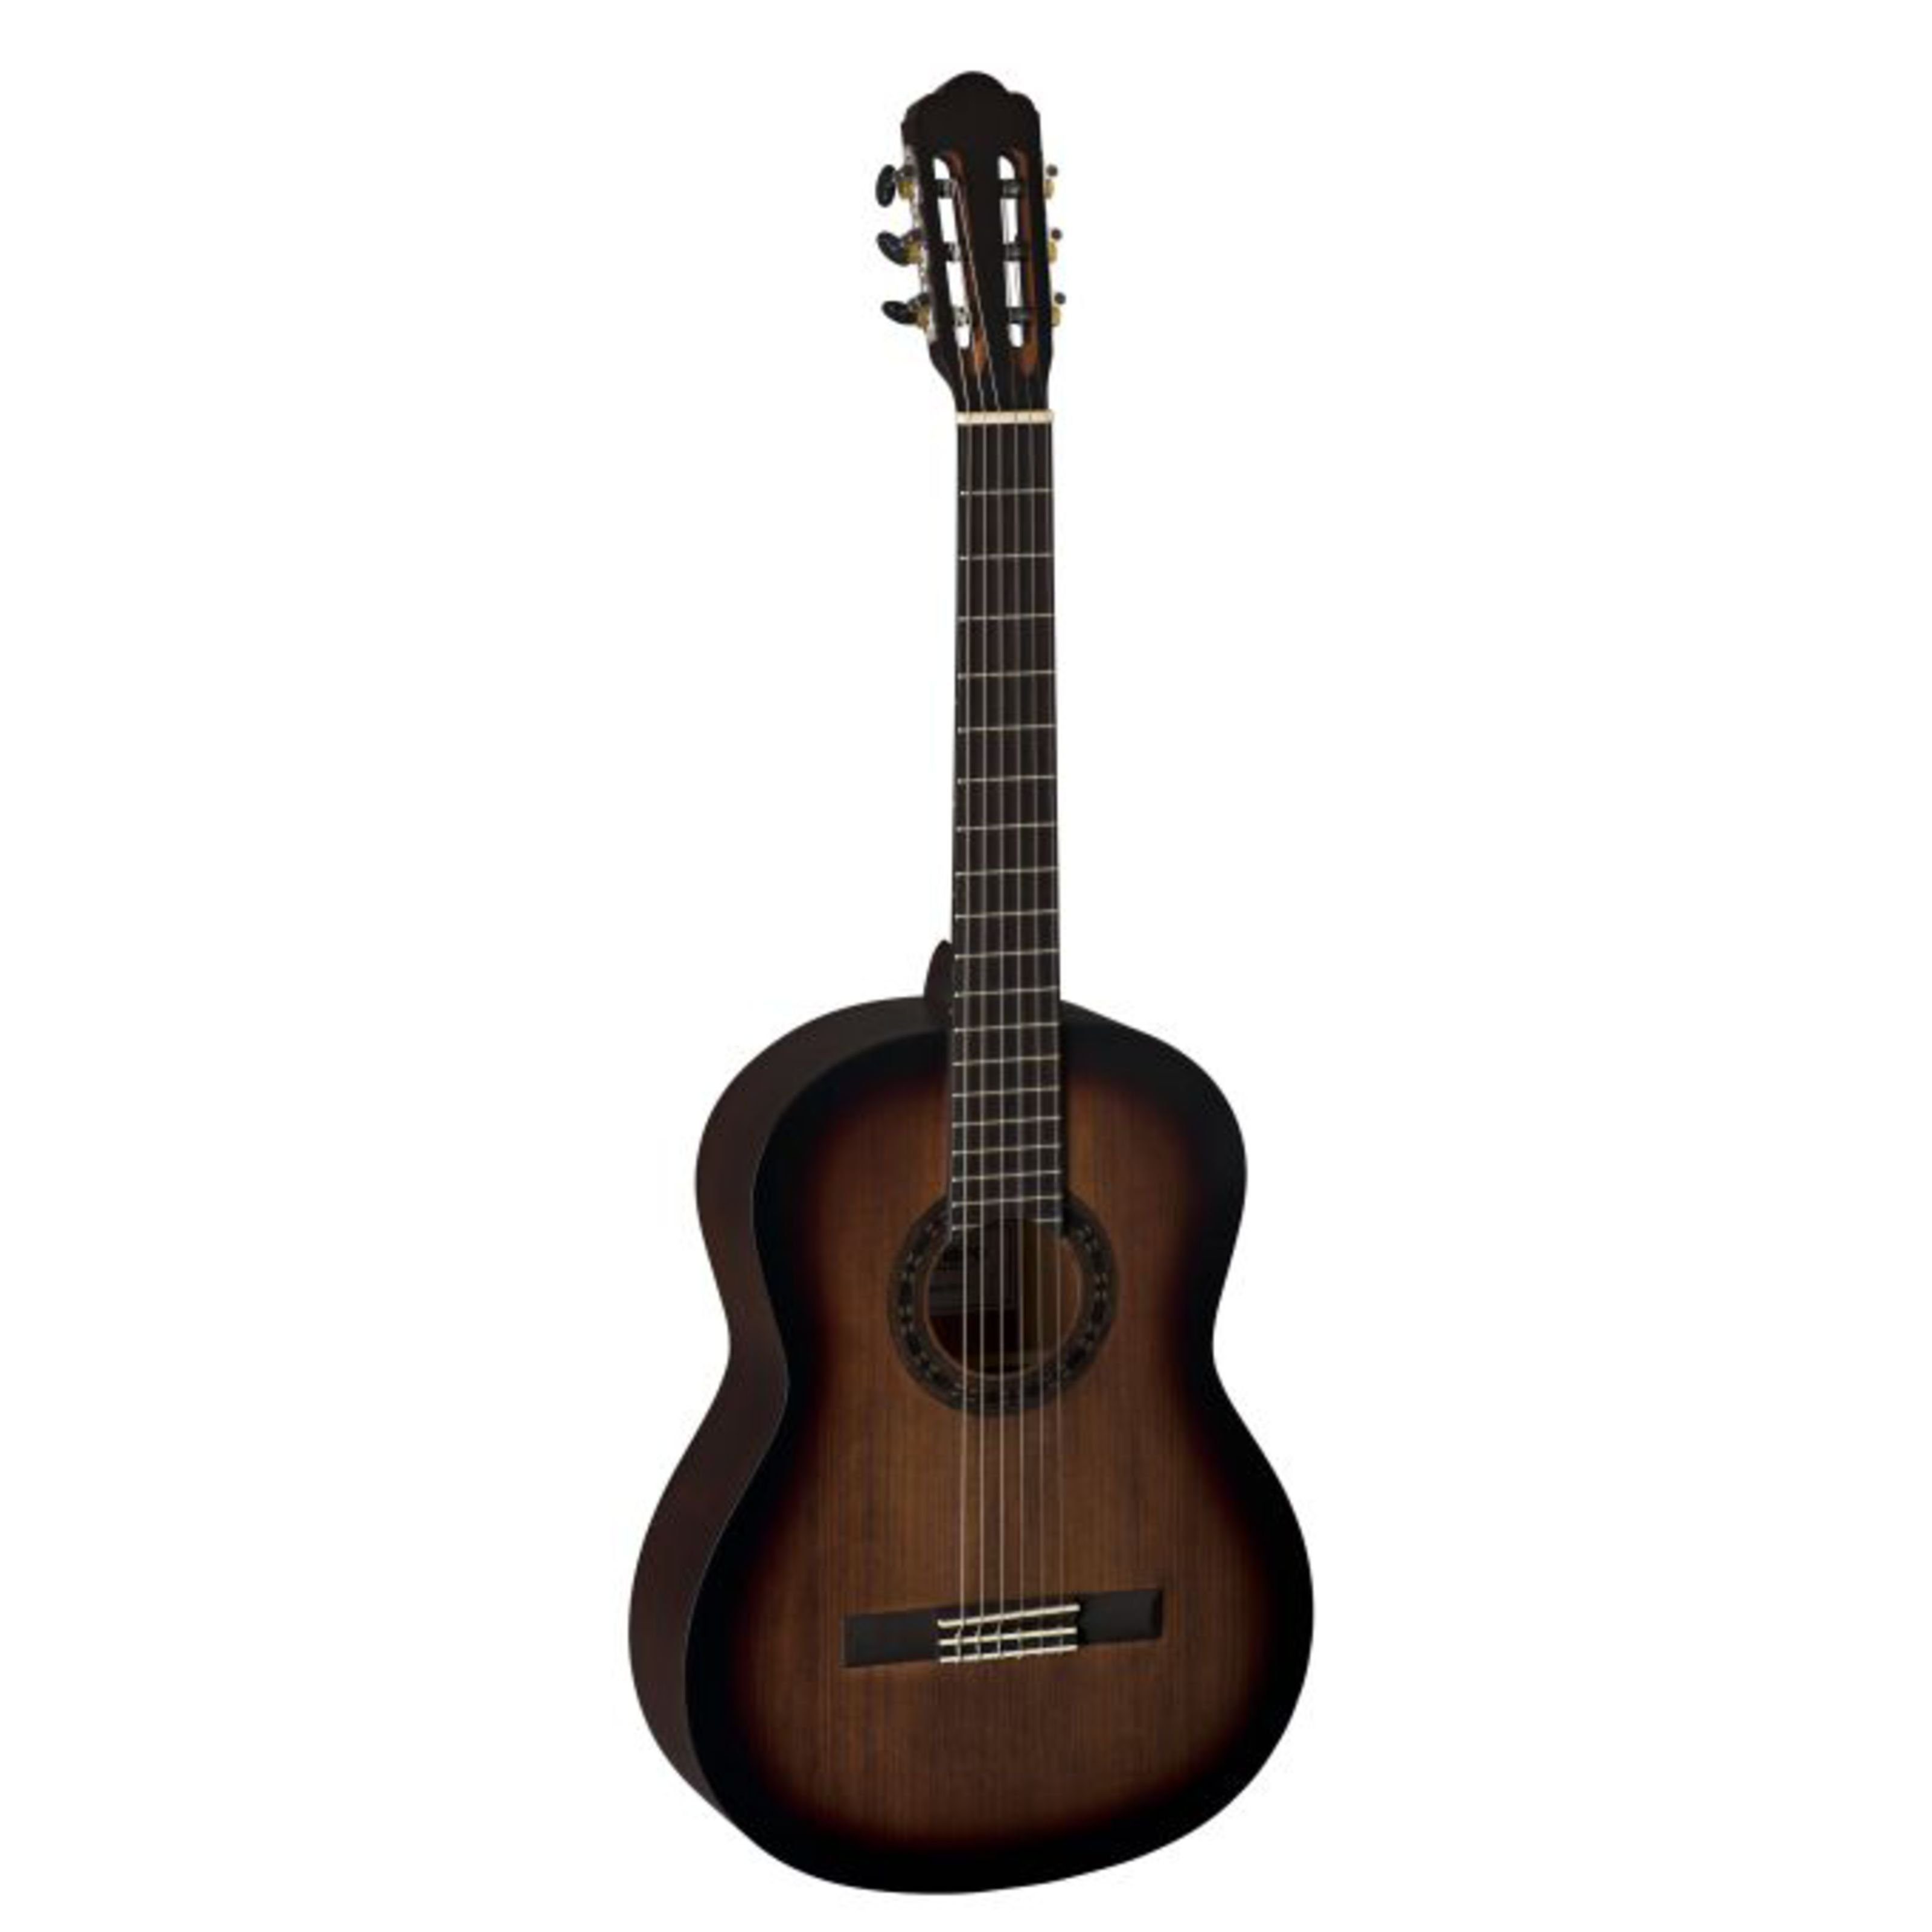 La Mancha Konzertgitarre, Granito 32-AB, Granito 32-AB - 4/4 Konzertgitarre